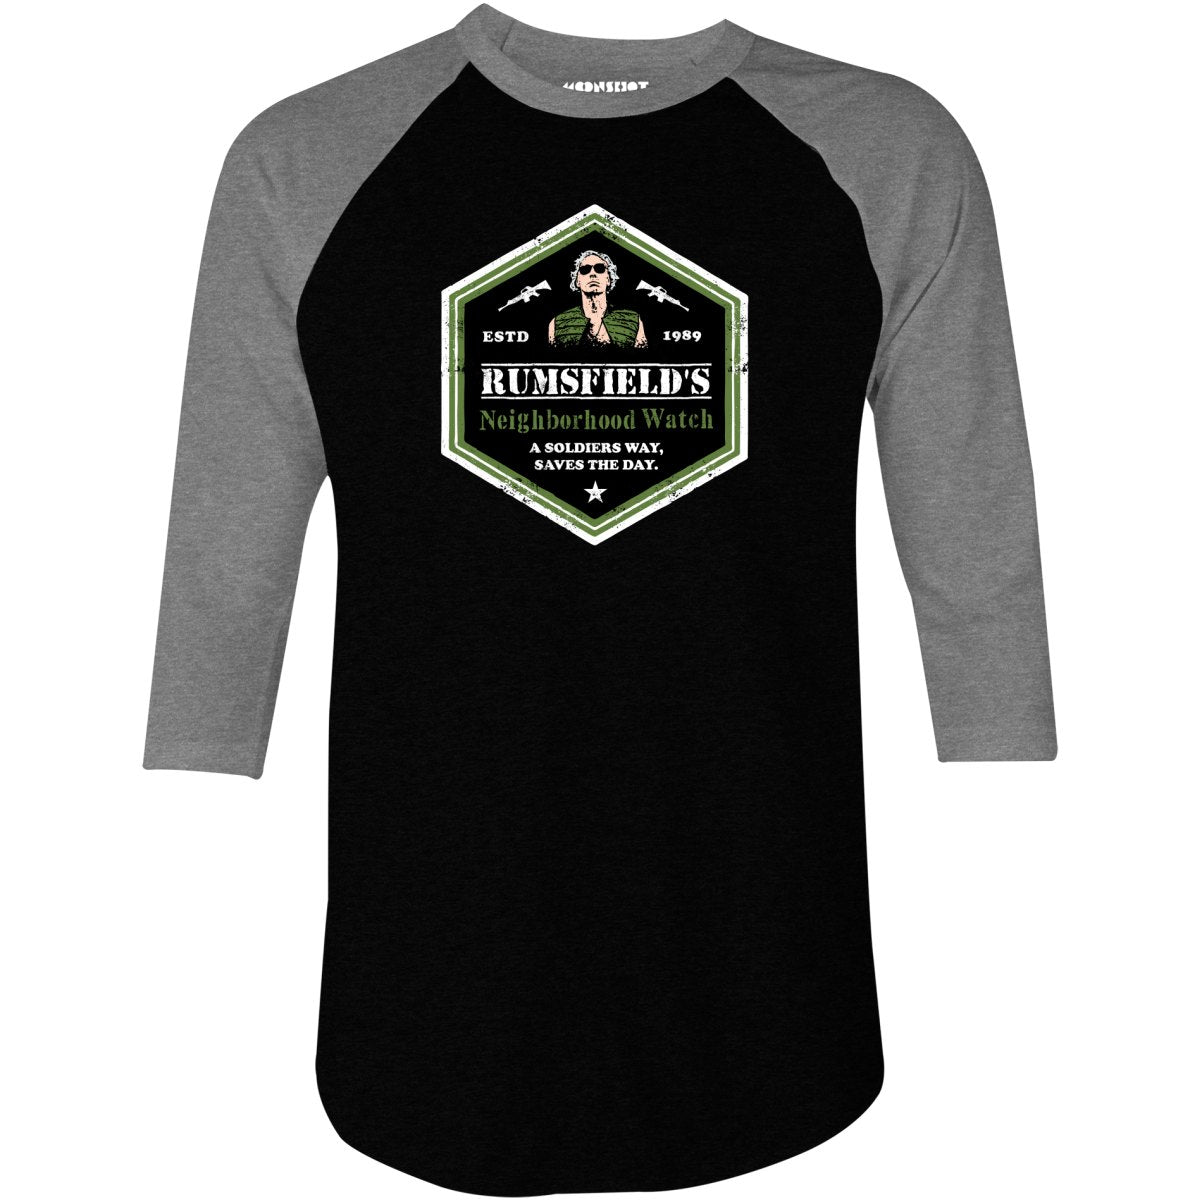 Rumsfield's Neighborhood Watch - 3/4 Sleeve Raglan T-Shirt